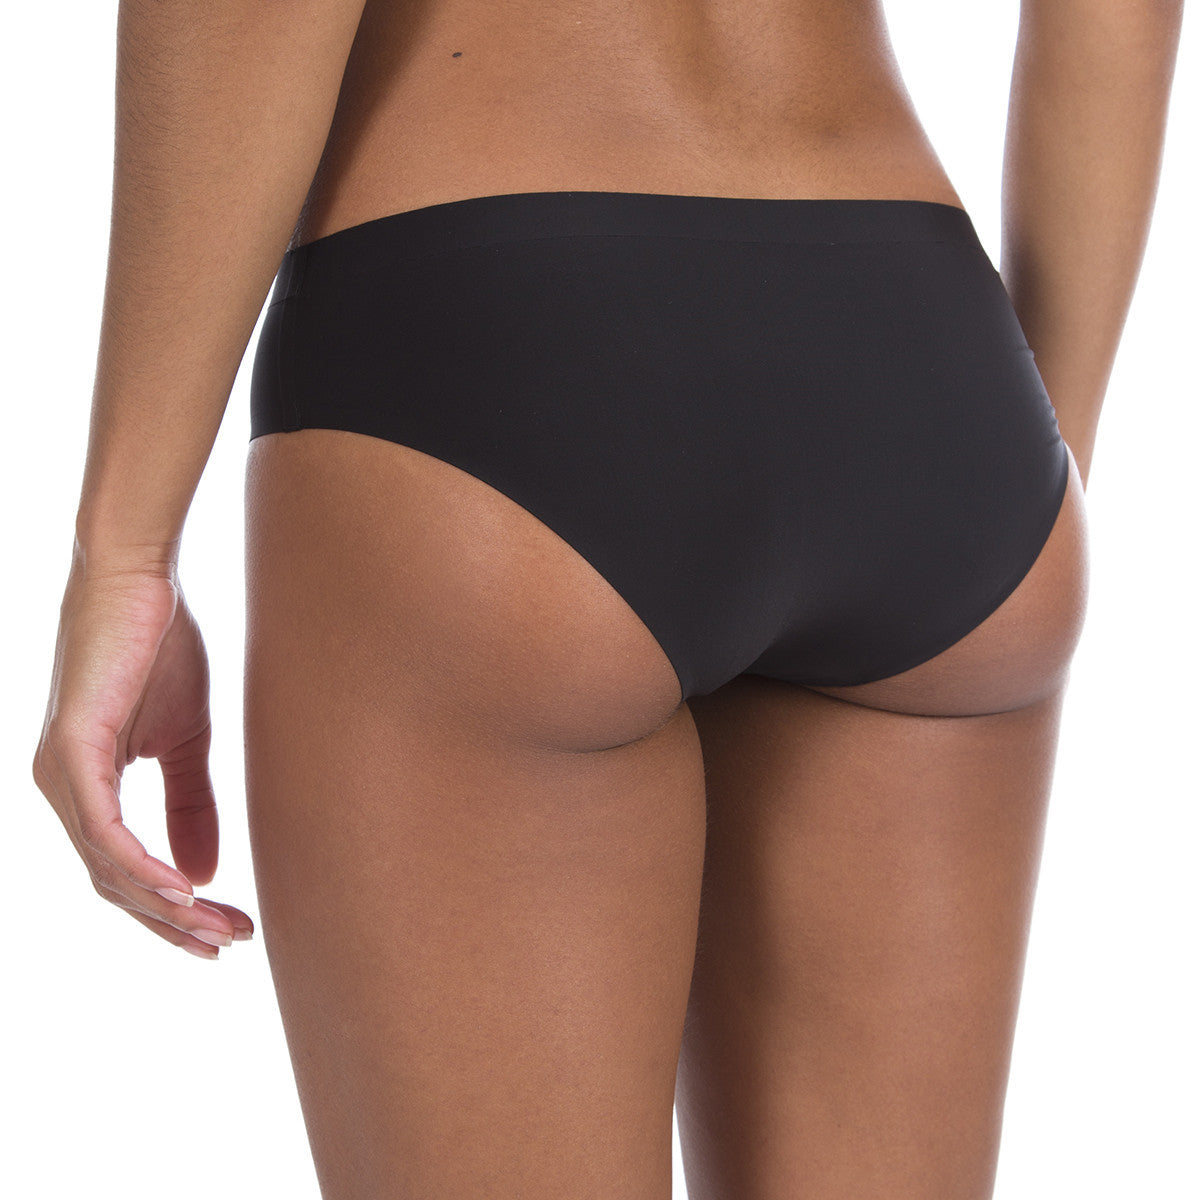 Wealurre Women's Seamless Underwear No Show Panties Soft Stretch Hipster  Bikini Underwears 5-Pack, Black & Gray, L price in UAE,  UAE